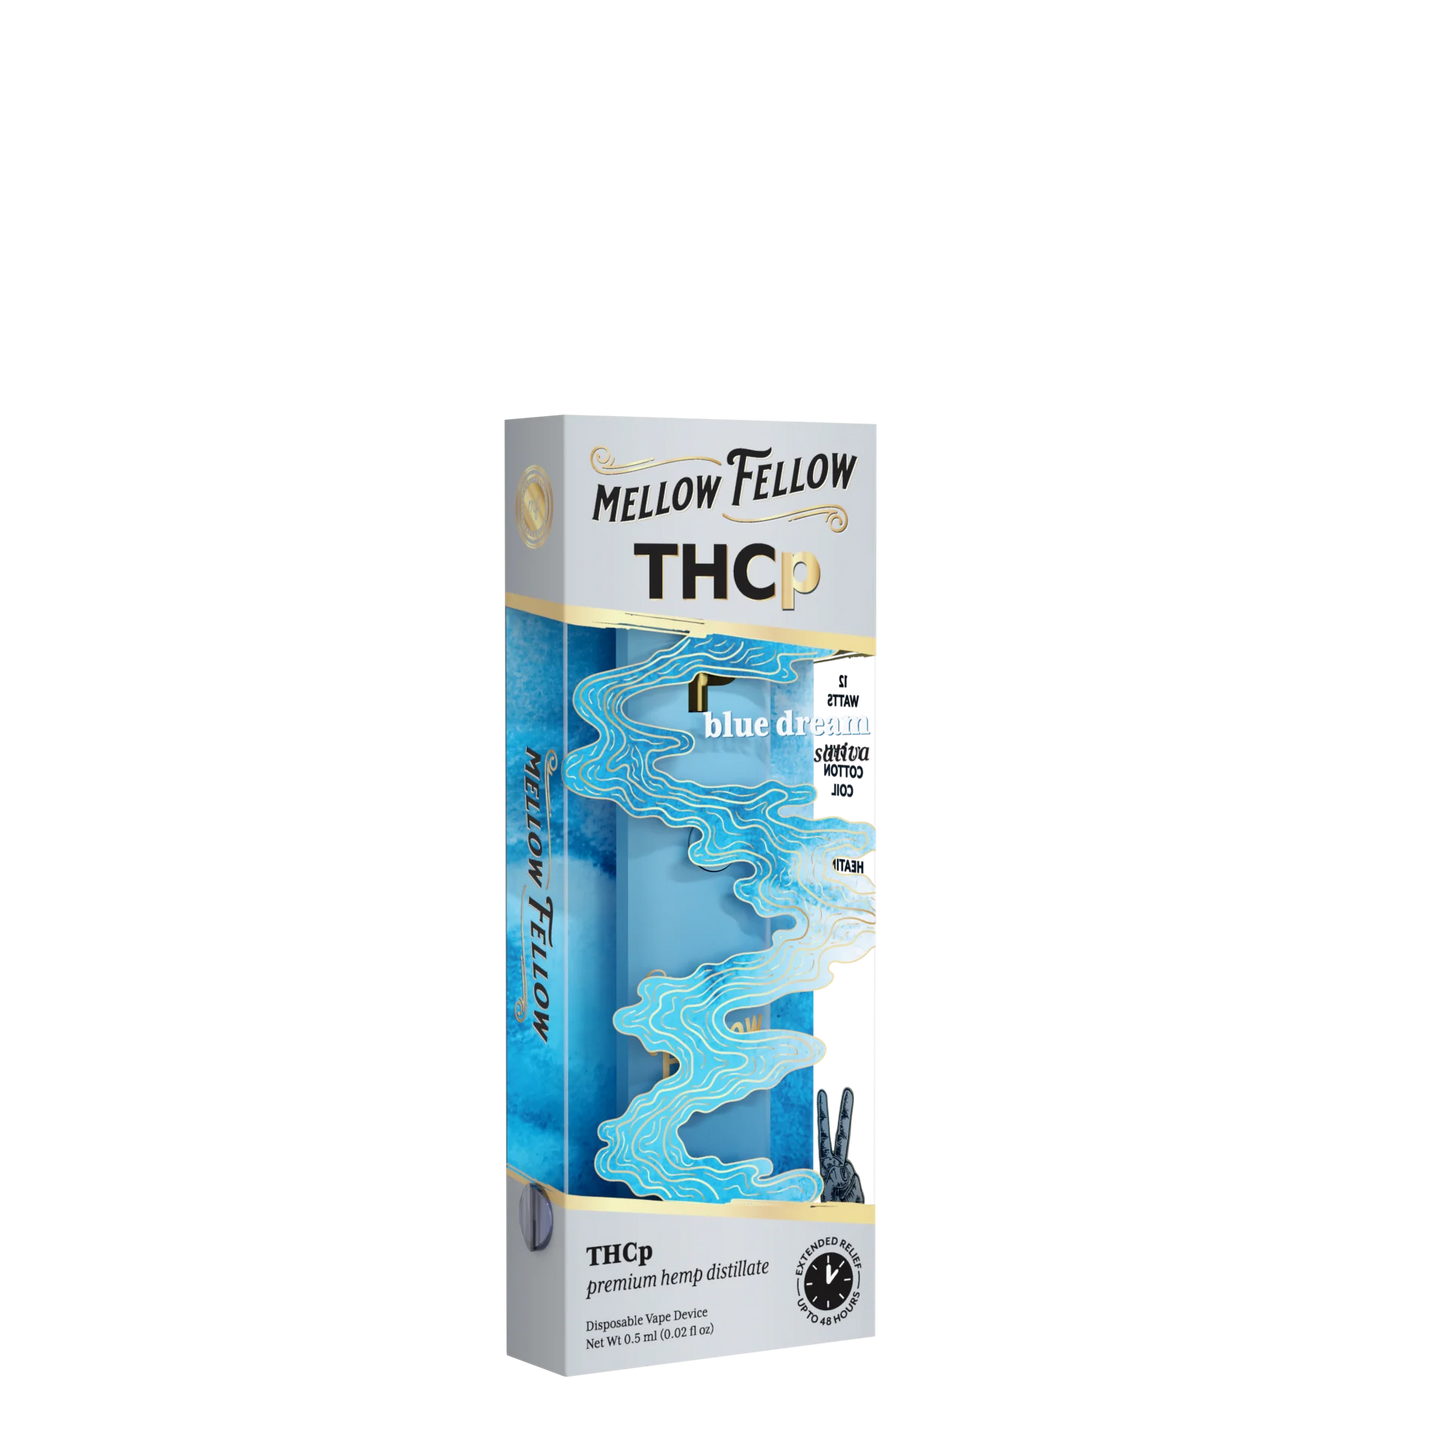 Mellow Fellow THCp 0.5g Disposable Vape - Blue Dream (Sativa) Best Sales Price - Vape Pens